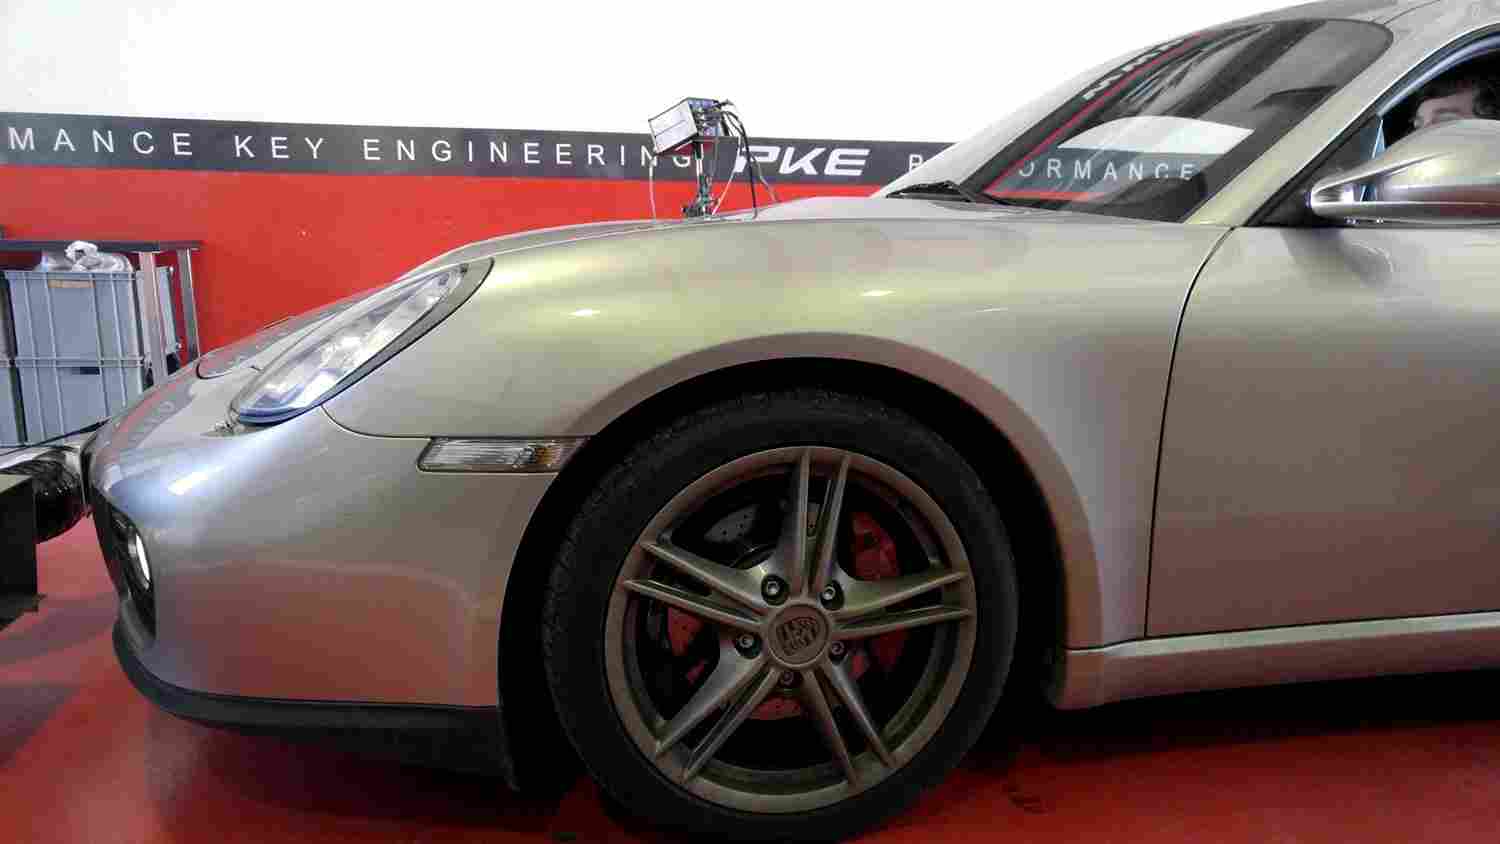 PKE SuperSPORT em Porsche Cayman 2.9 DFI 265cv – 2011